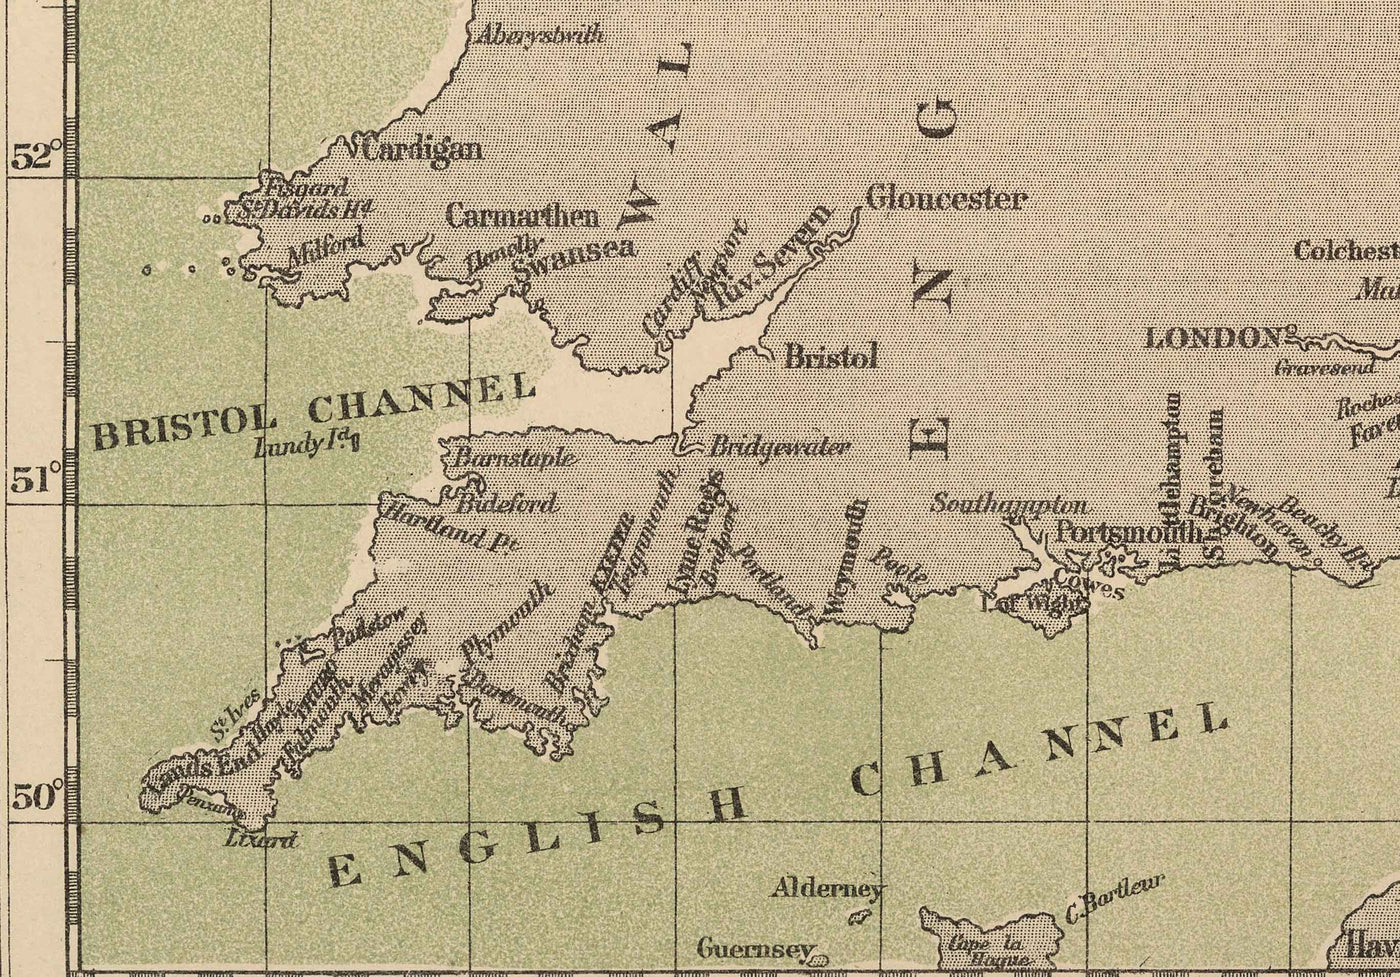 Old Mackerel Fish Map of the North Sea, 1883 by O.T. Olsen - Mackerel Fishing, Distribution, Spawning, Etc.